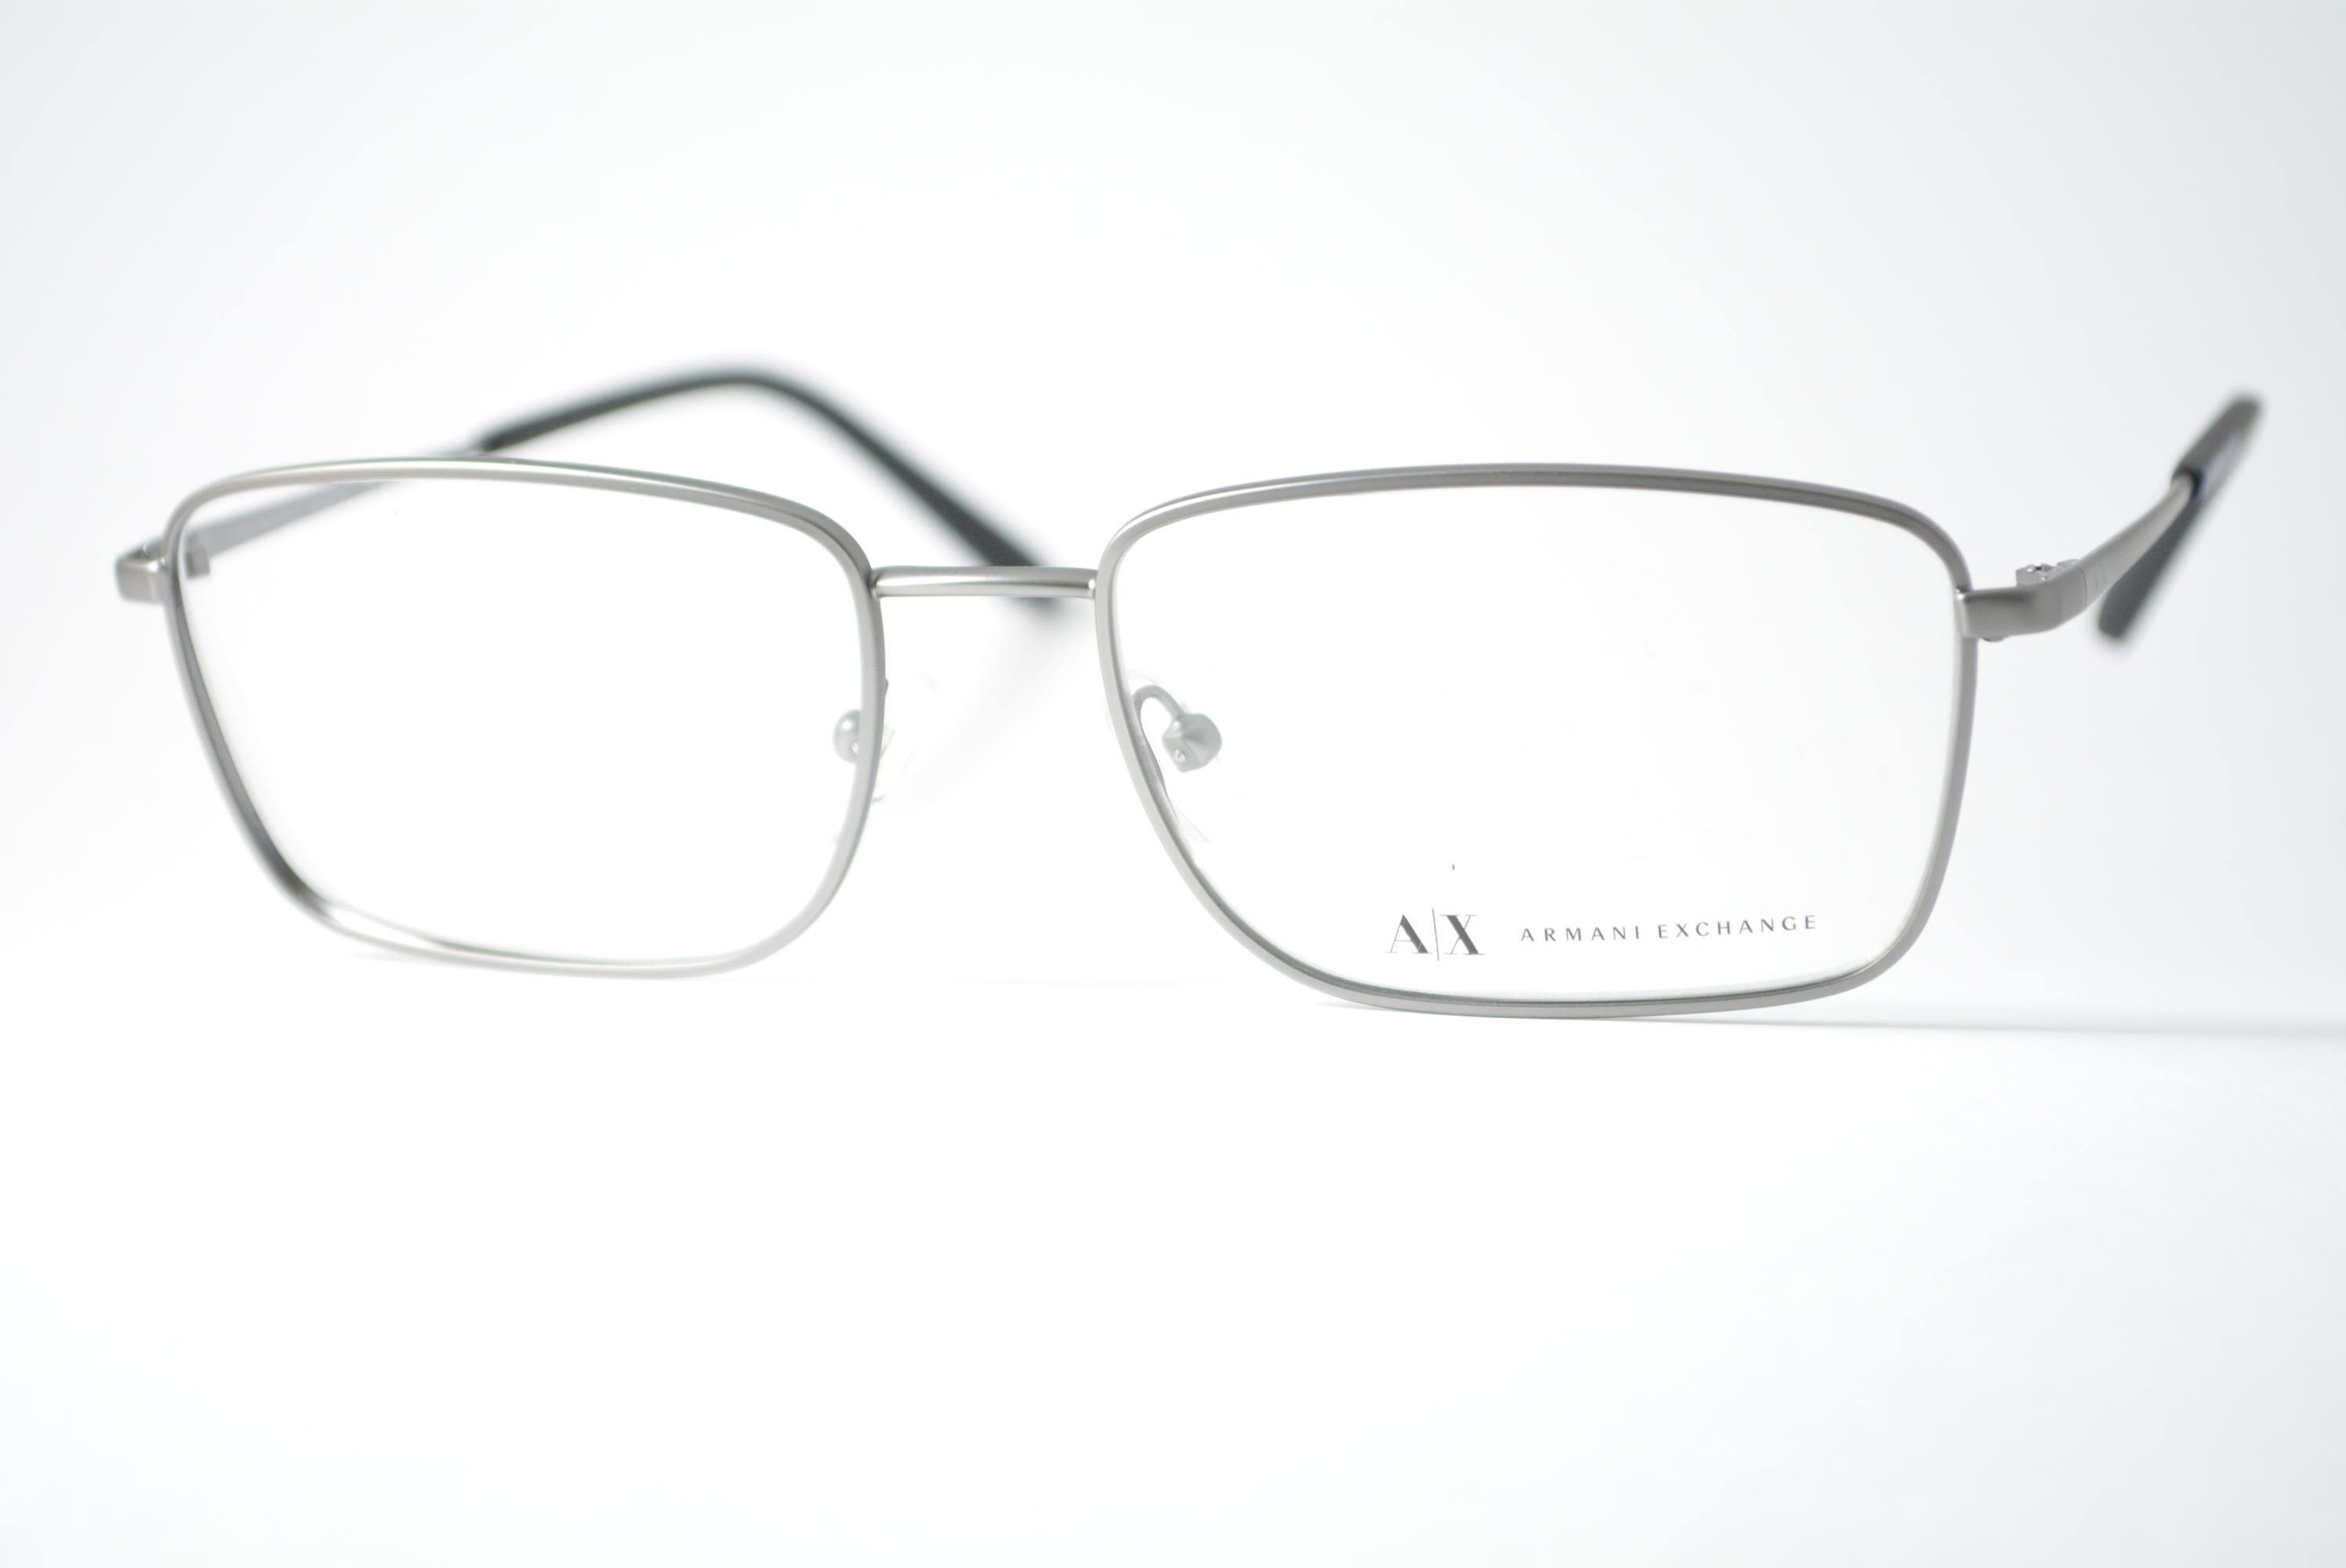 armação de óculos Armani Exchange mod ax1057 6006